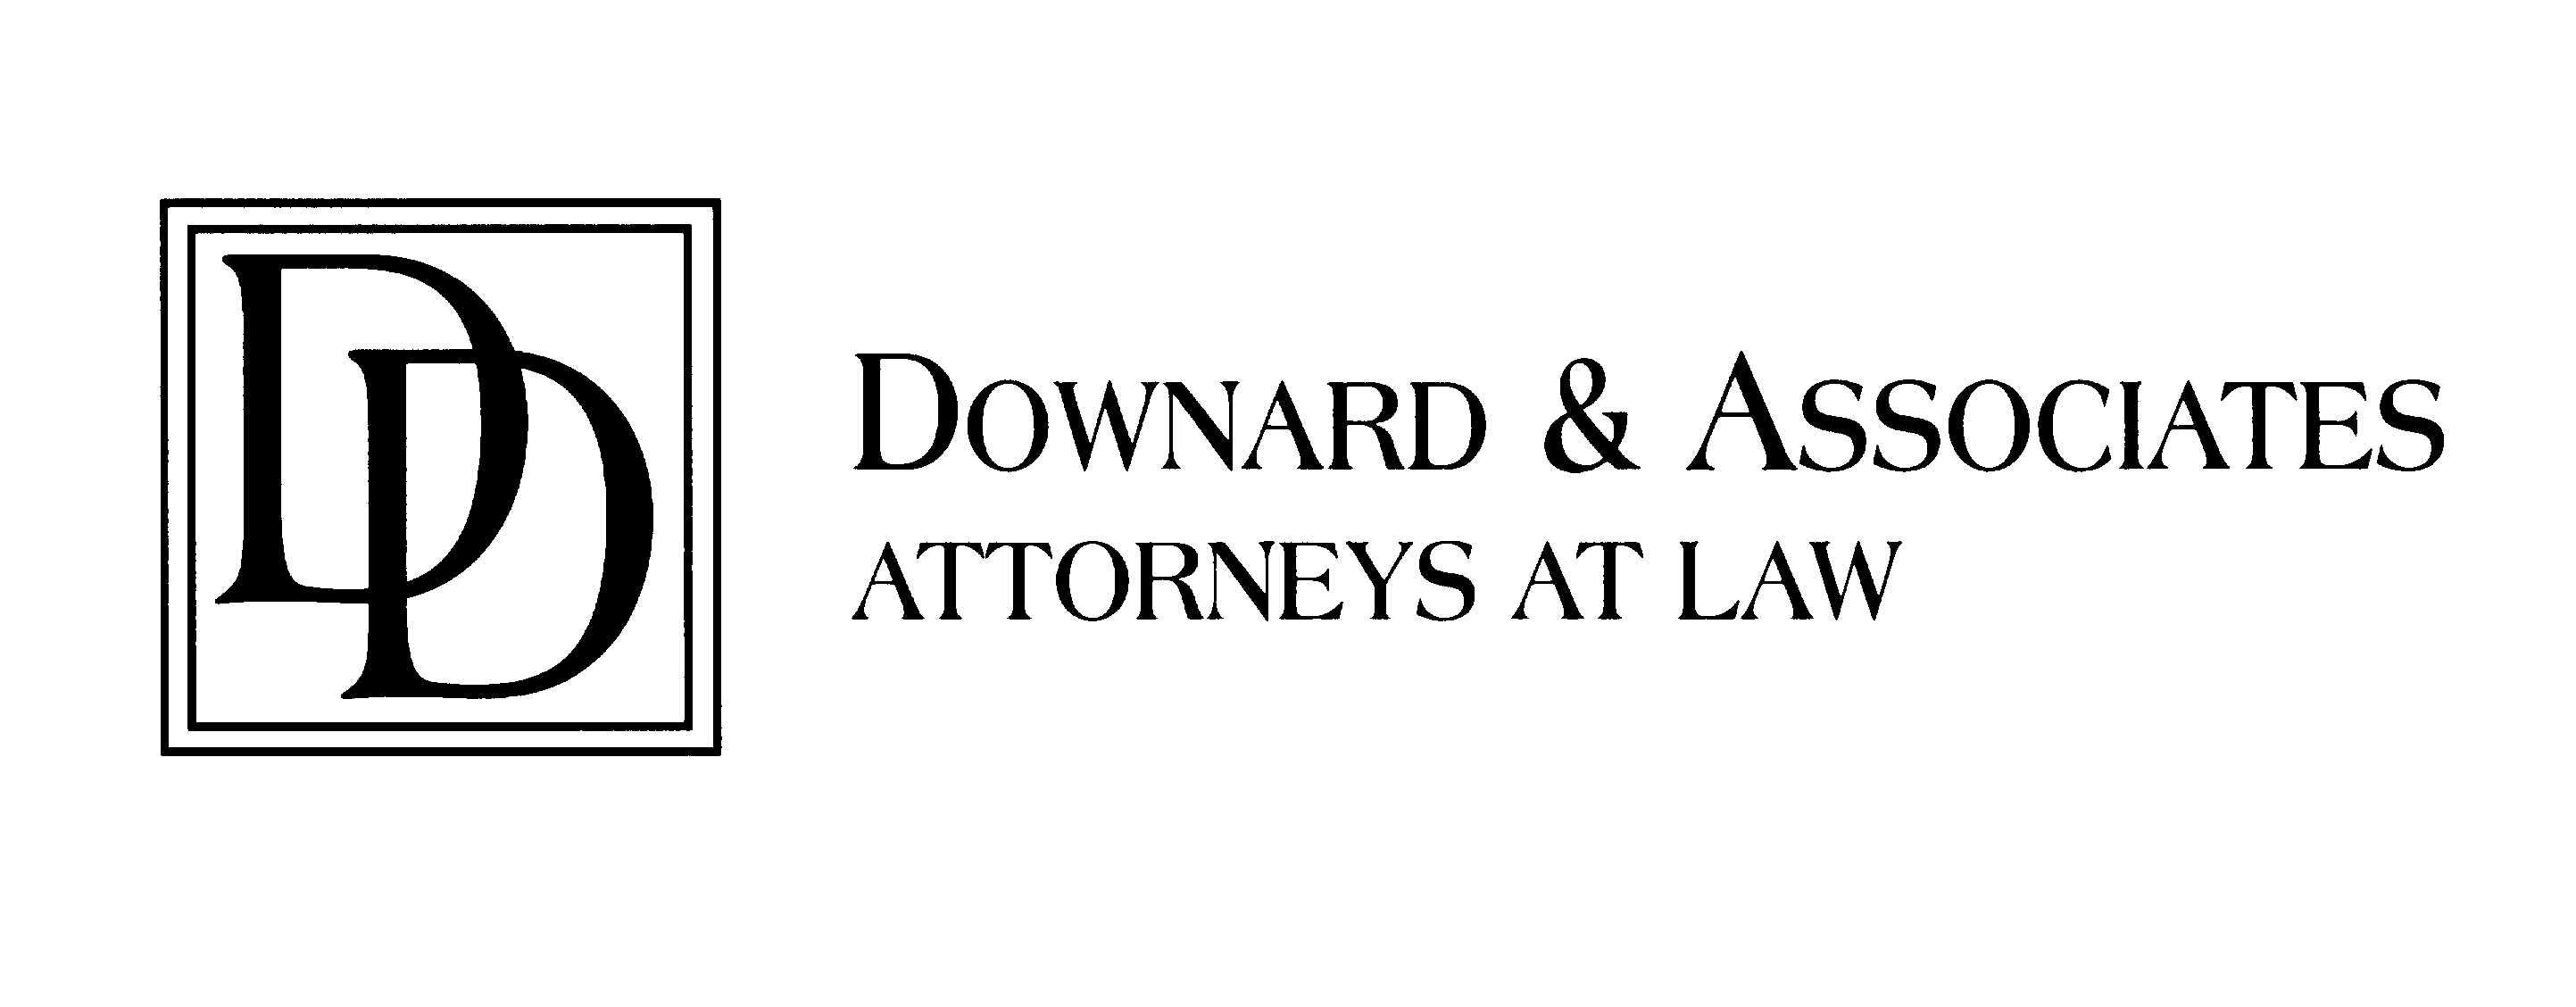 Downard & Associates Attorneys At Law